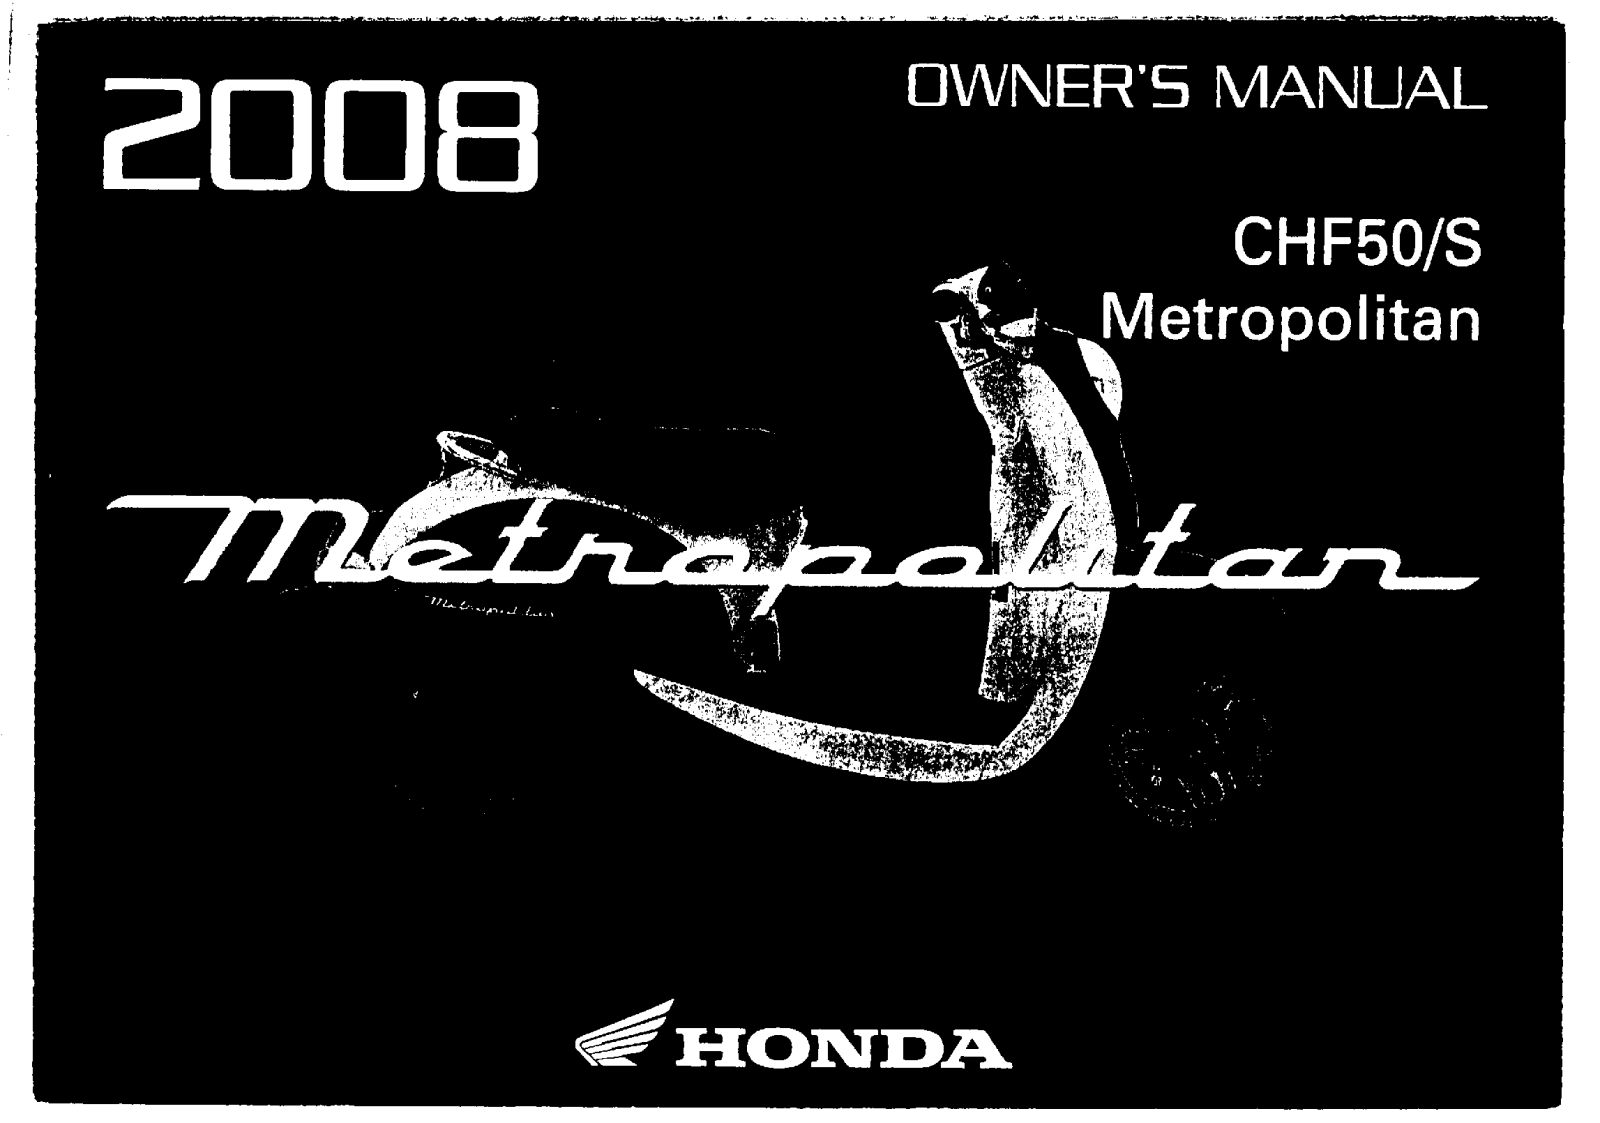 Honda CHF50, CHF50S2008 Owner's Manual